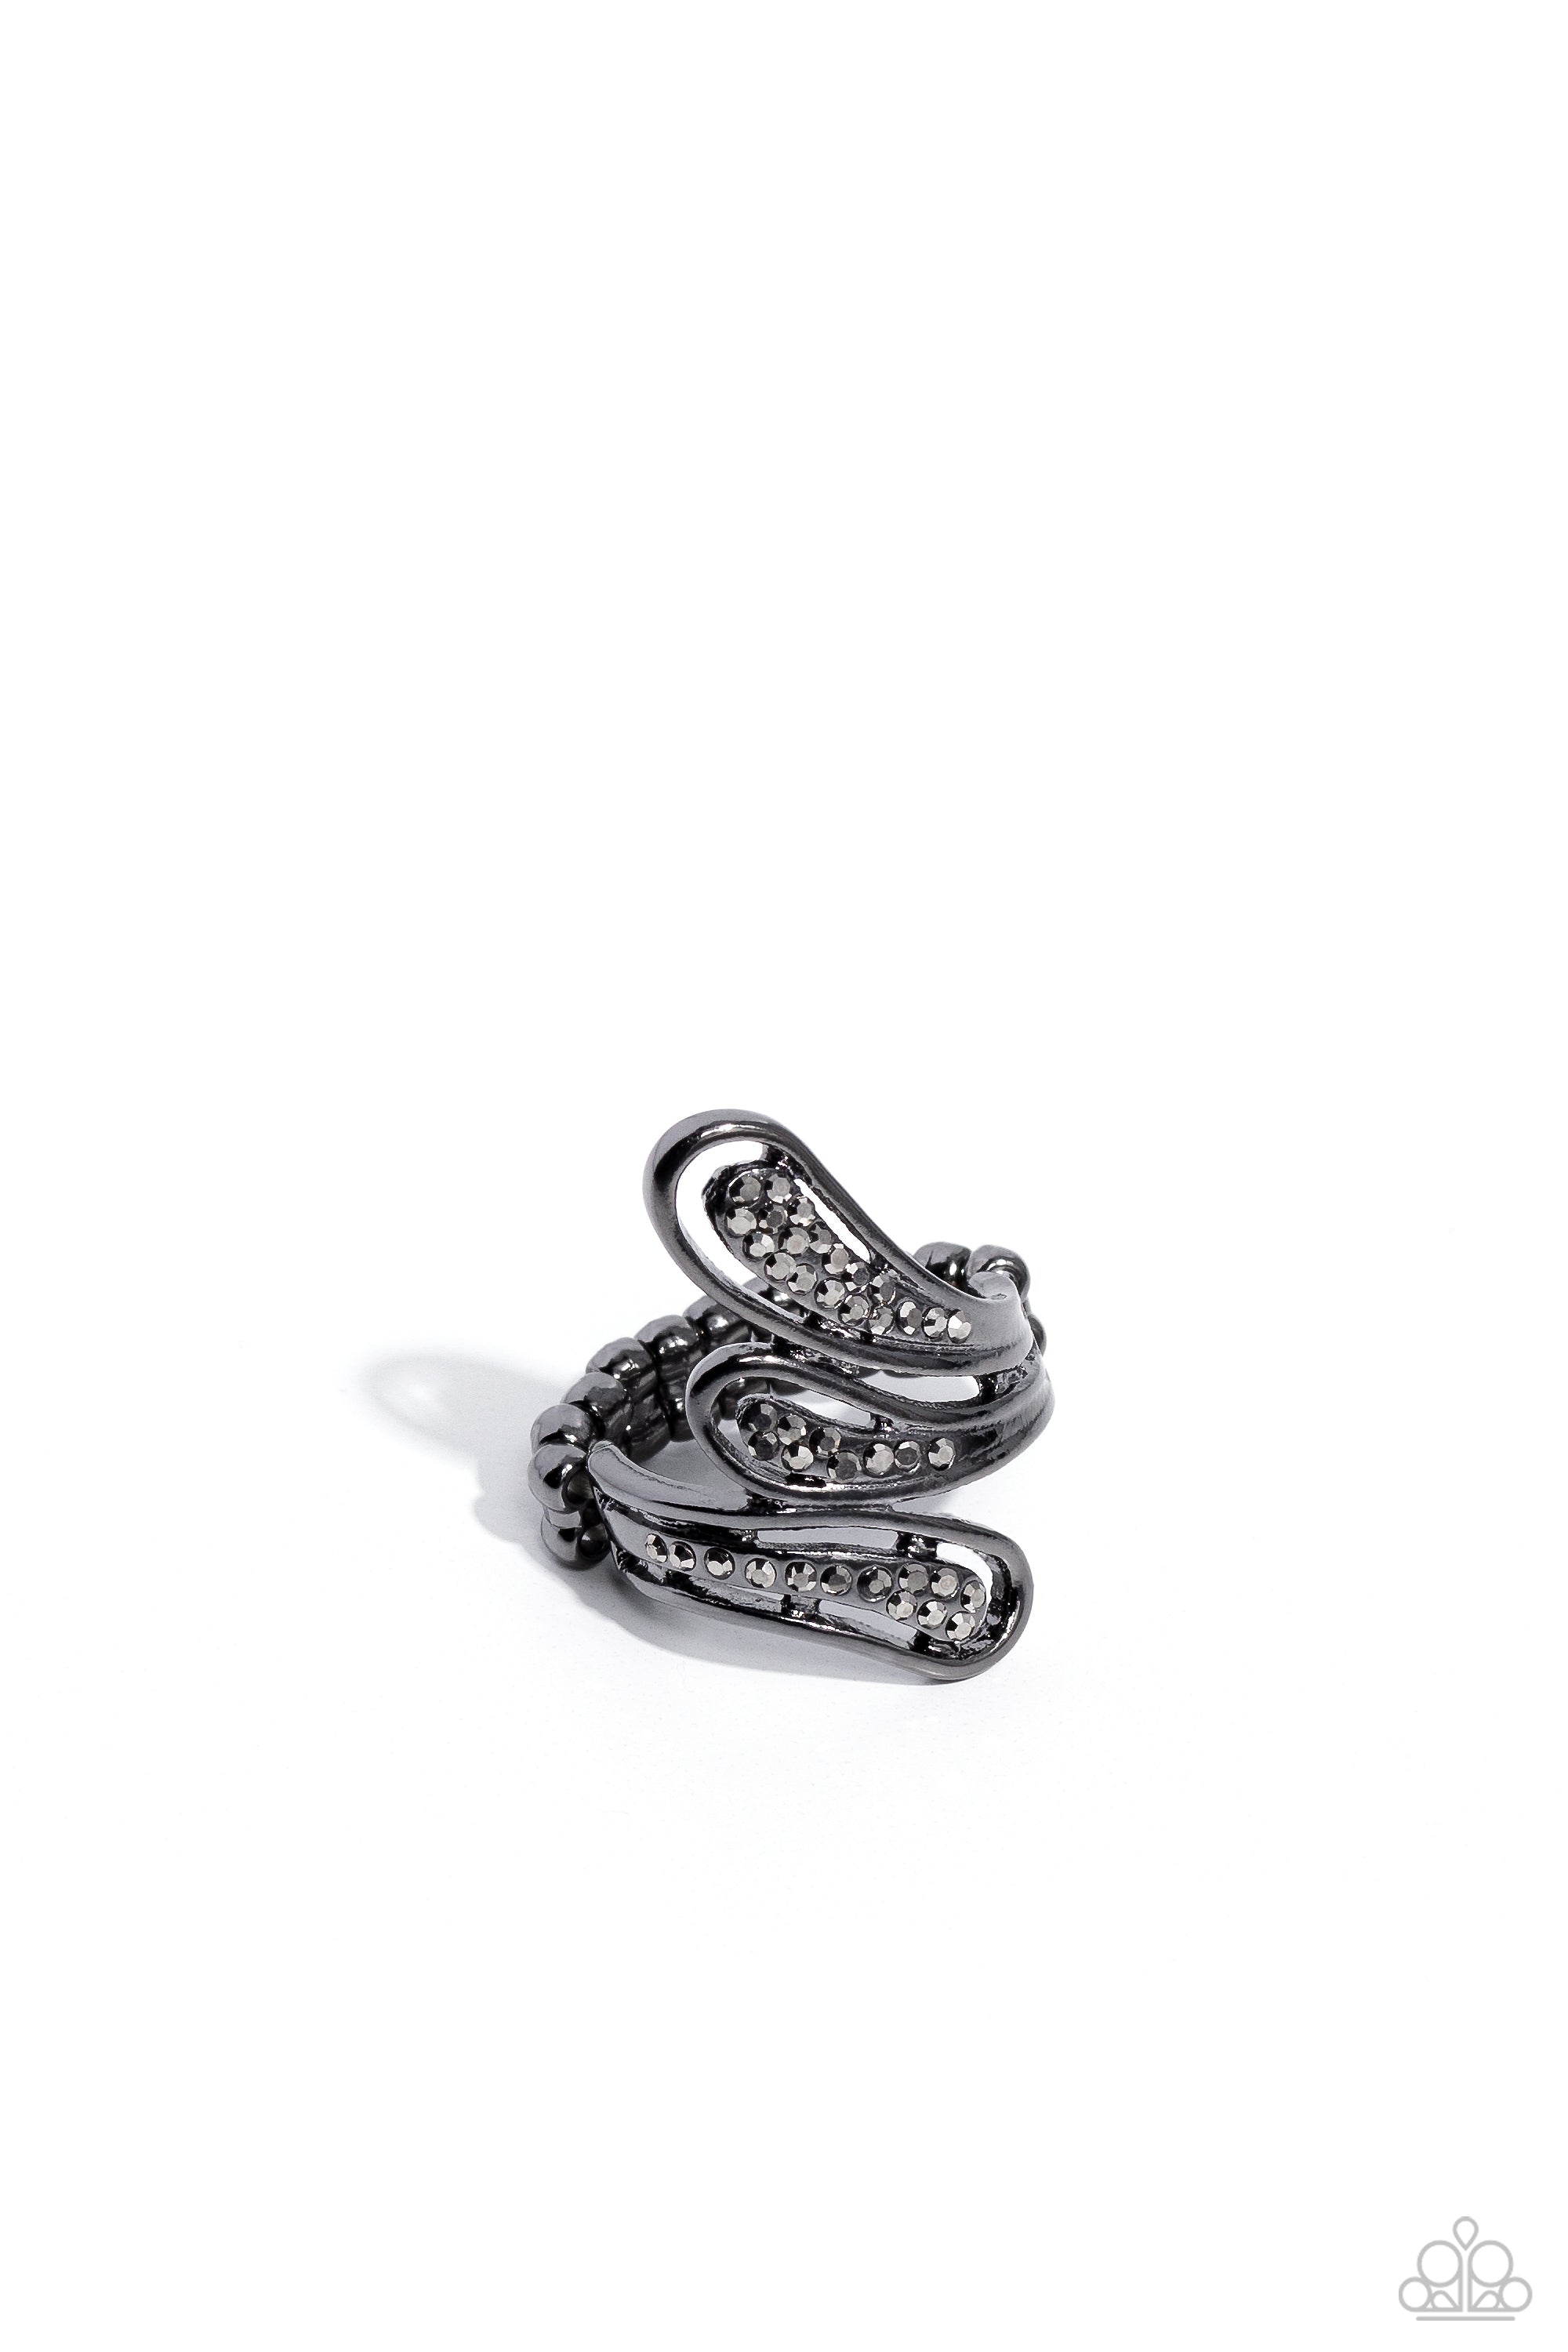 Flared Fashion Gunmetal Black & Hematite Ring - Paparazzi Accessories- lightbox - CarasShop.com - $5 Jewelry by Cara Jewels